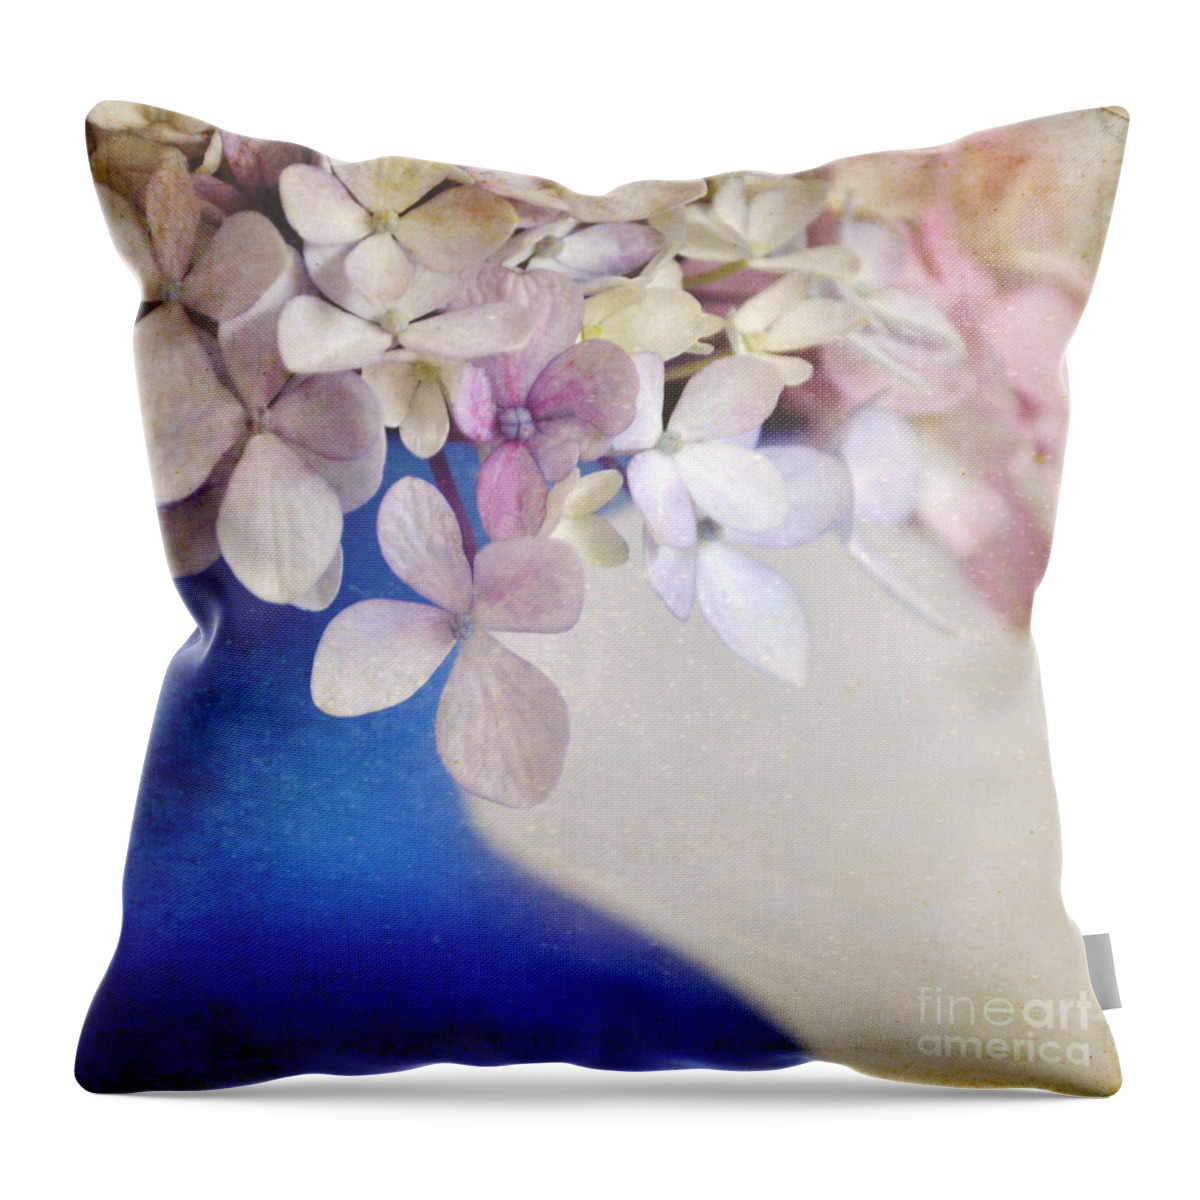 Hydrangeas Throw Pillow featuring the photograph Hydrangeas in deep blue vase by Lyn Randle